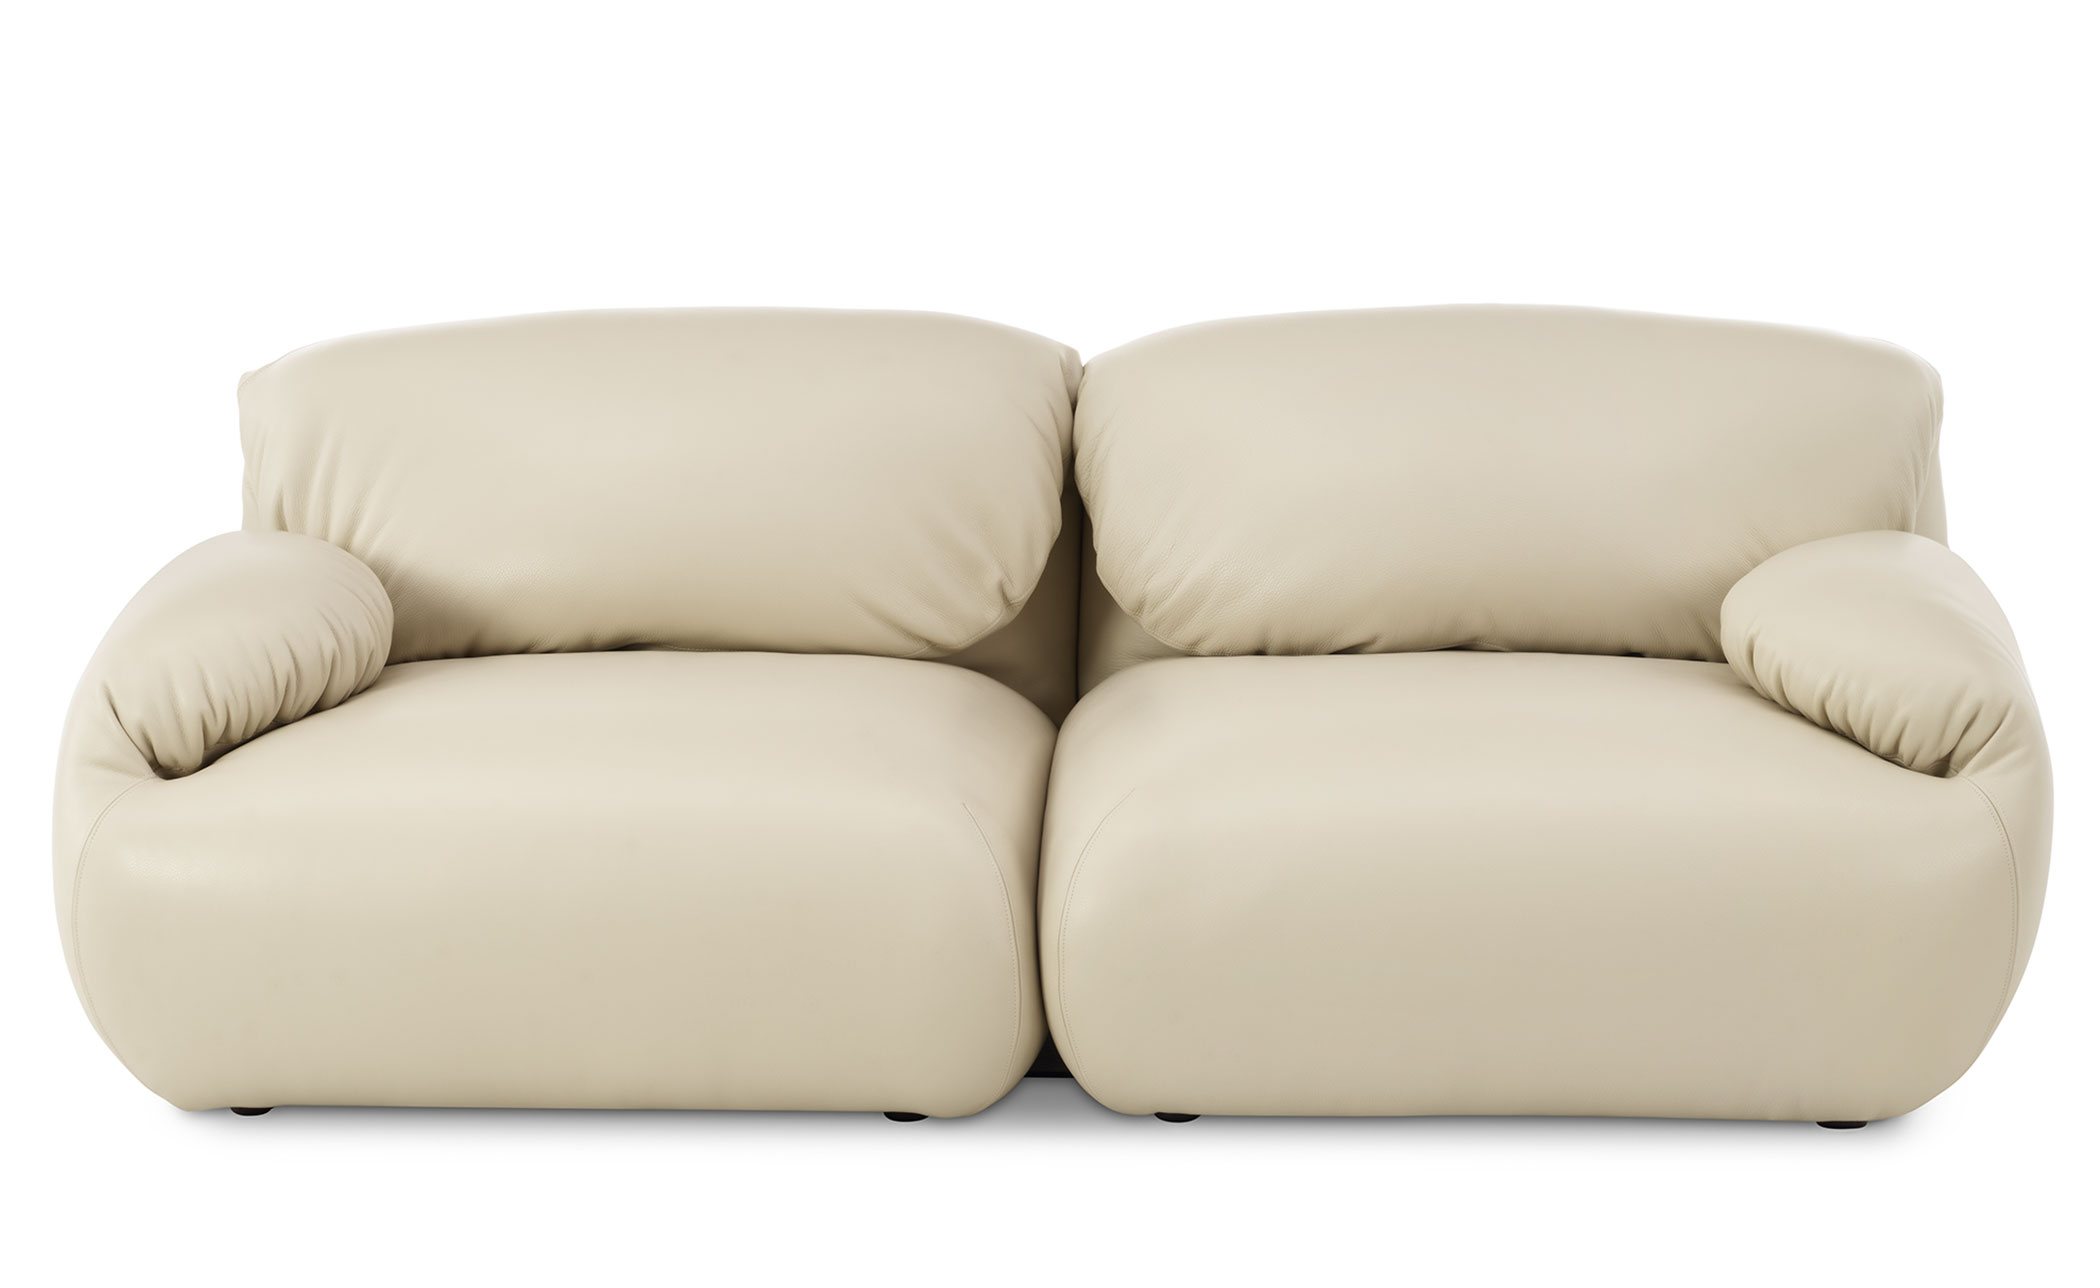 Luva Modular Sofa 2 Seat Gabriel Tan Herman Miller 03ccf574c4 